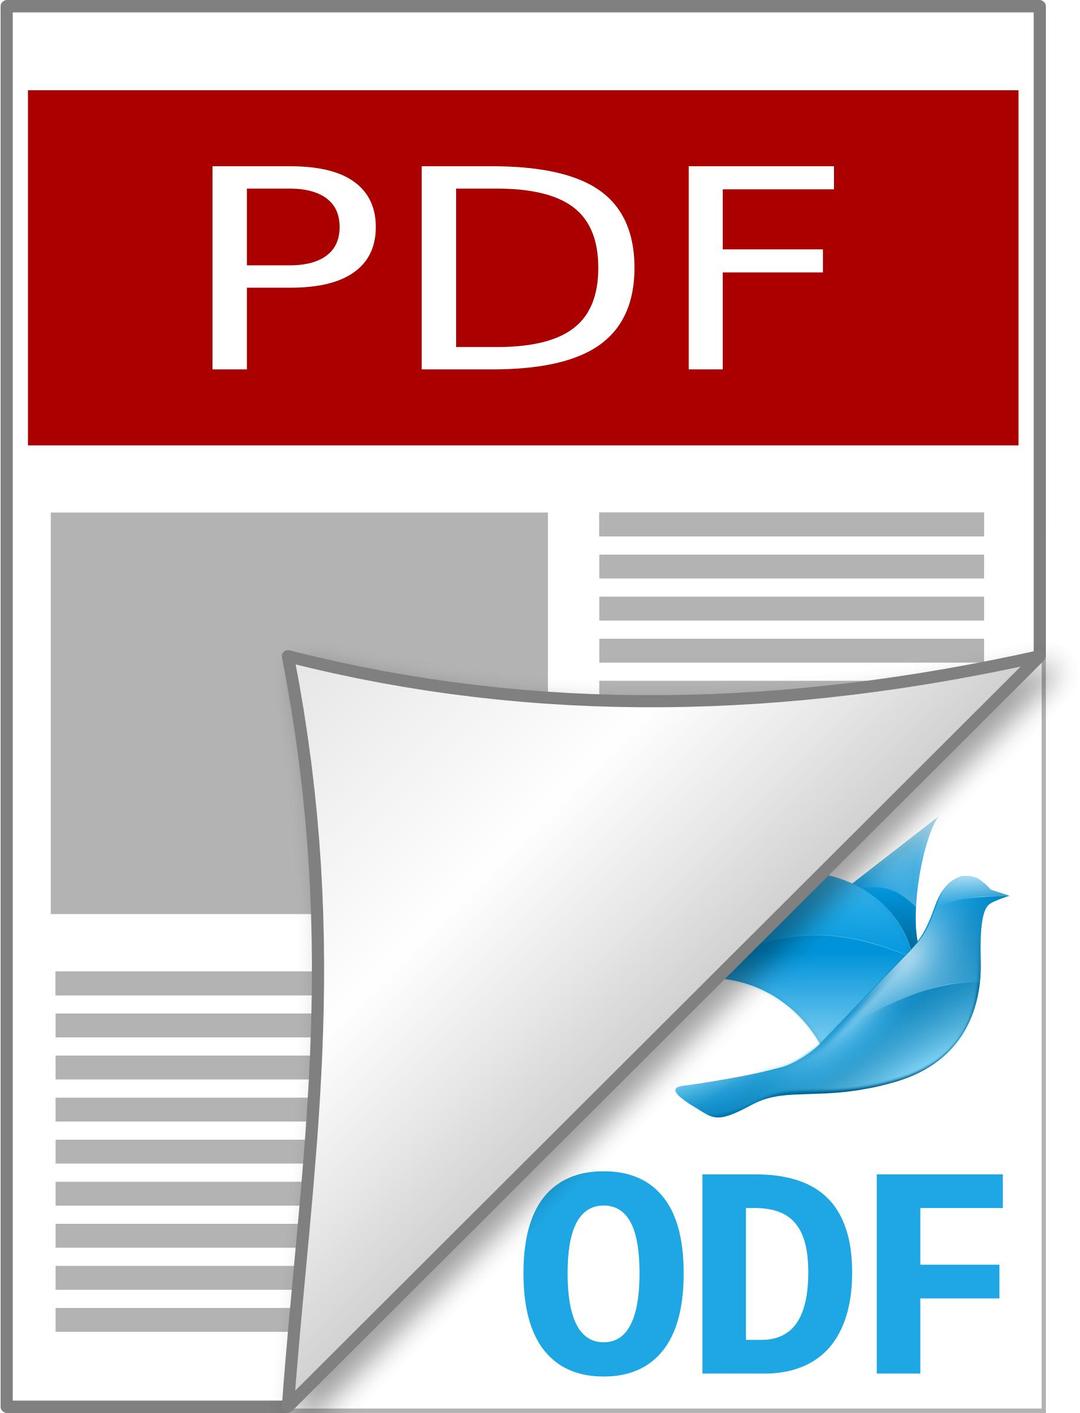 PDF-ODF-hybrid icon.svg png transparent